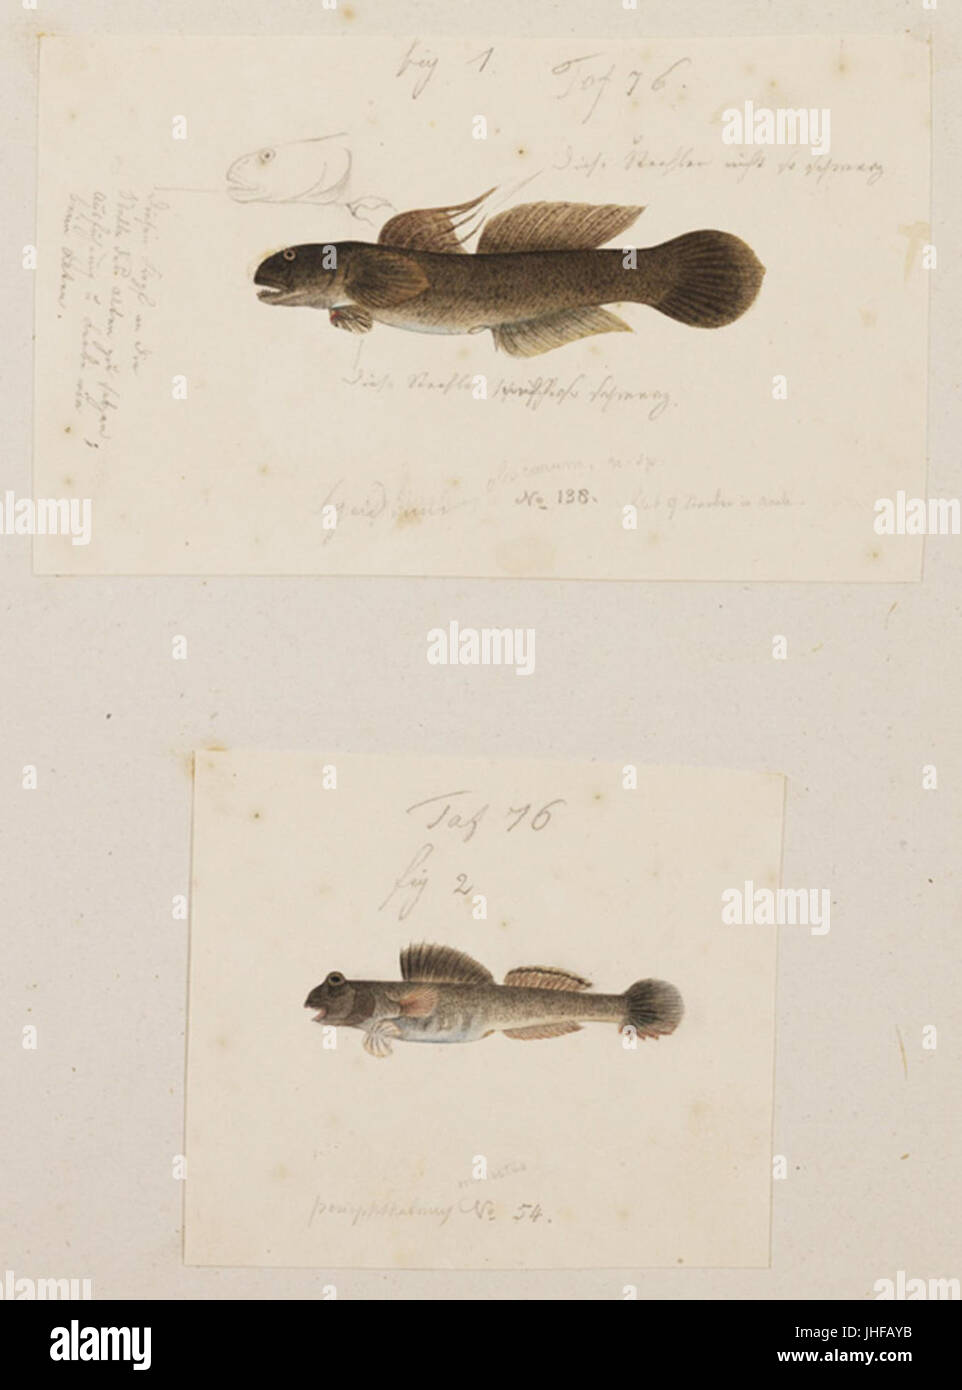 Naturalis Biodiversity Center - RMNH.ART.203 - Pseudolabrus japonicus - Halichoeres poecilopterus - Kawahara Keiga - 1823 - 1829 - Siebold Collection - pencil drawing - water colour Stock Photo